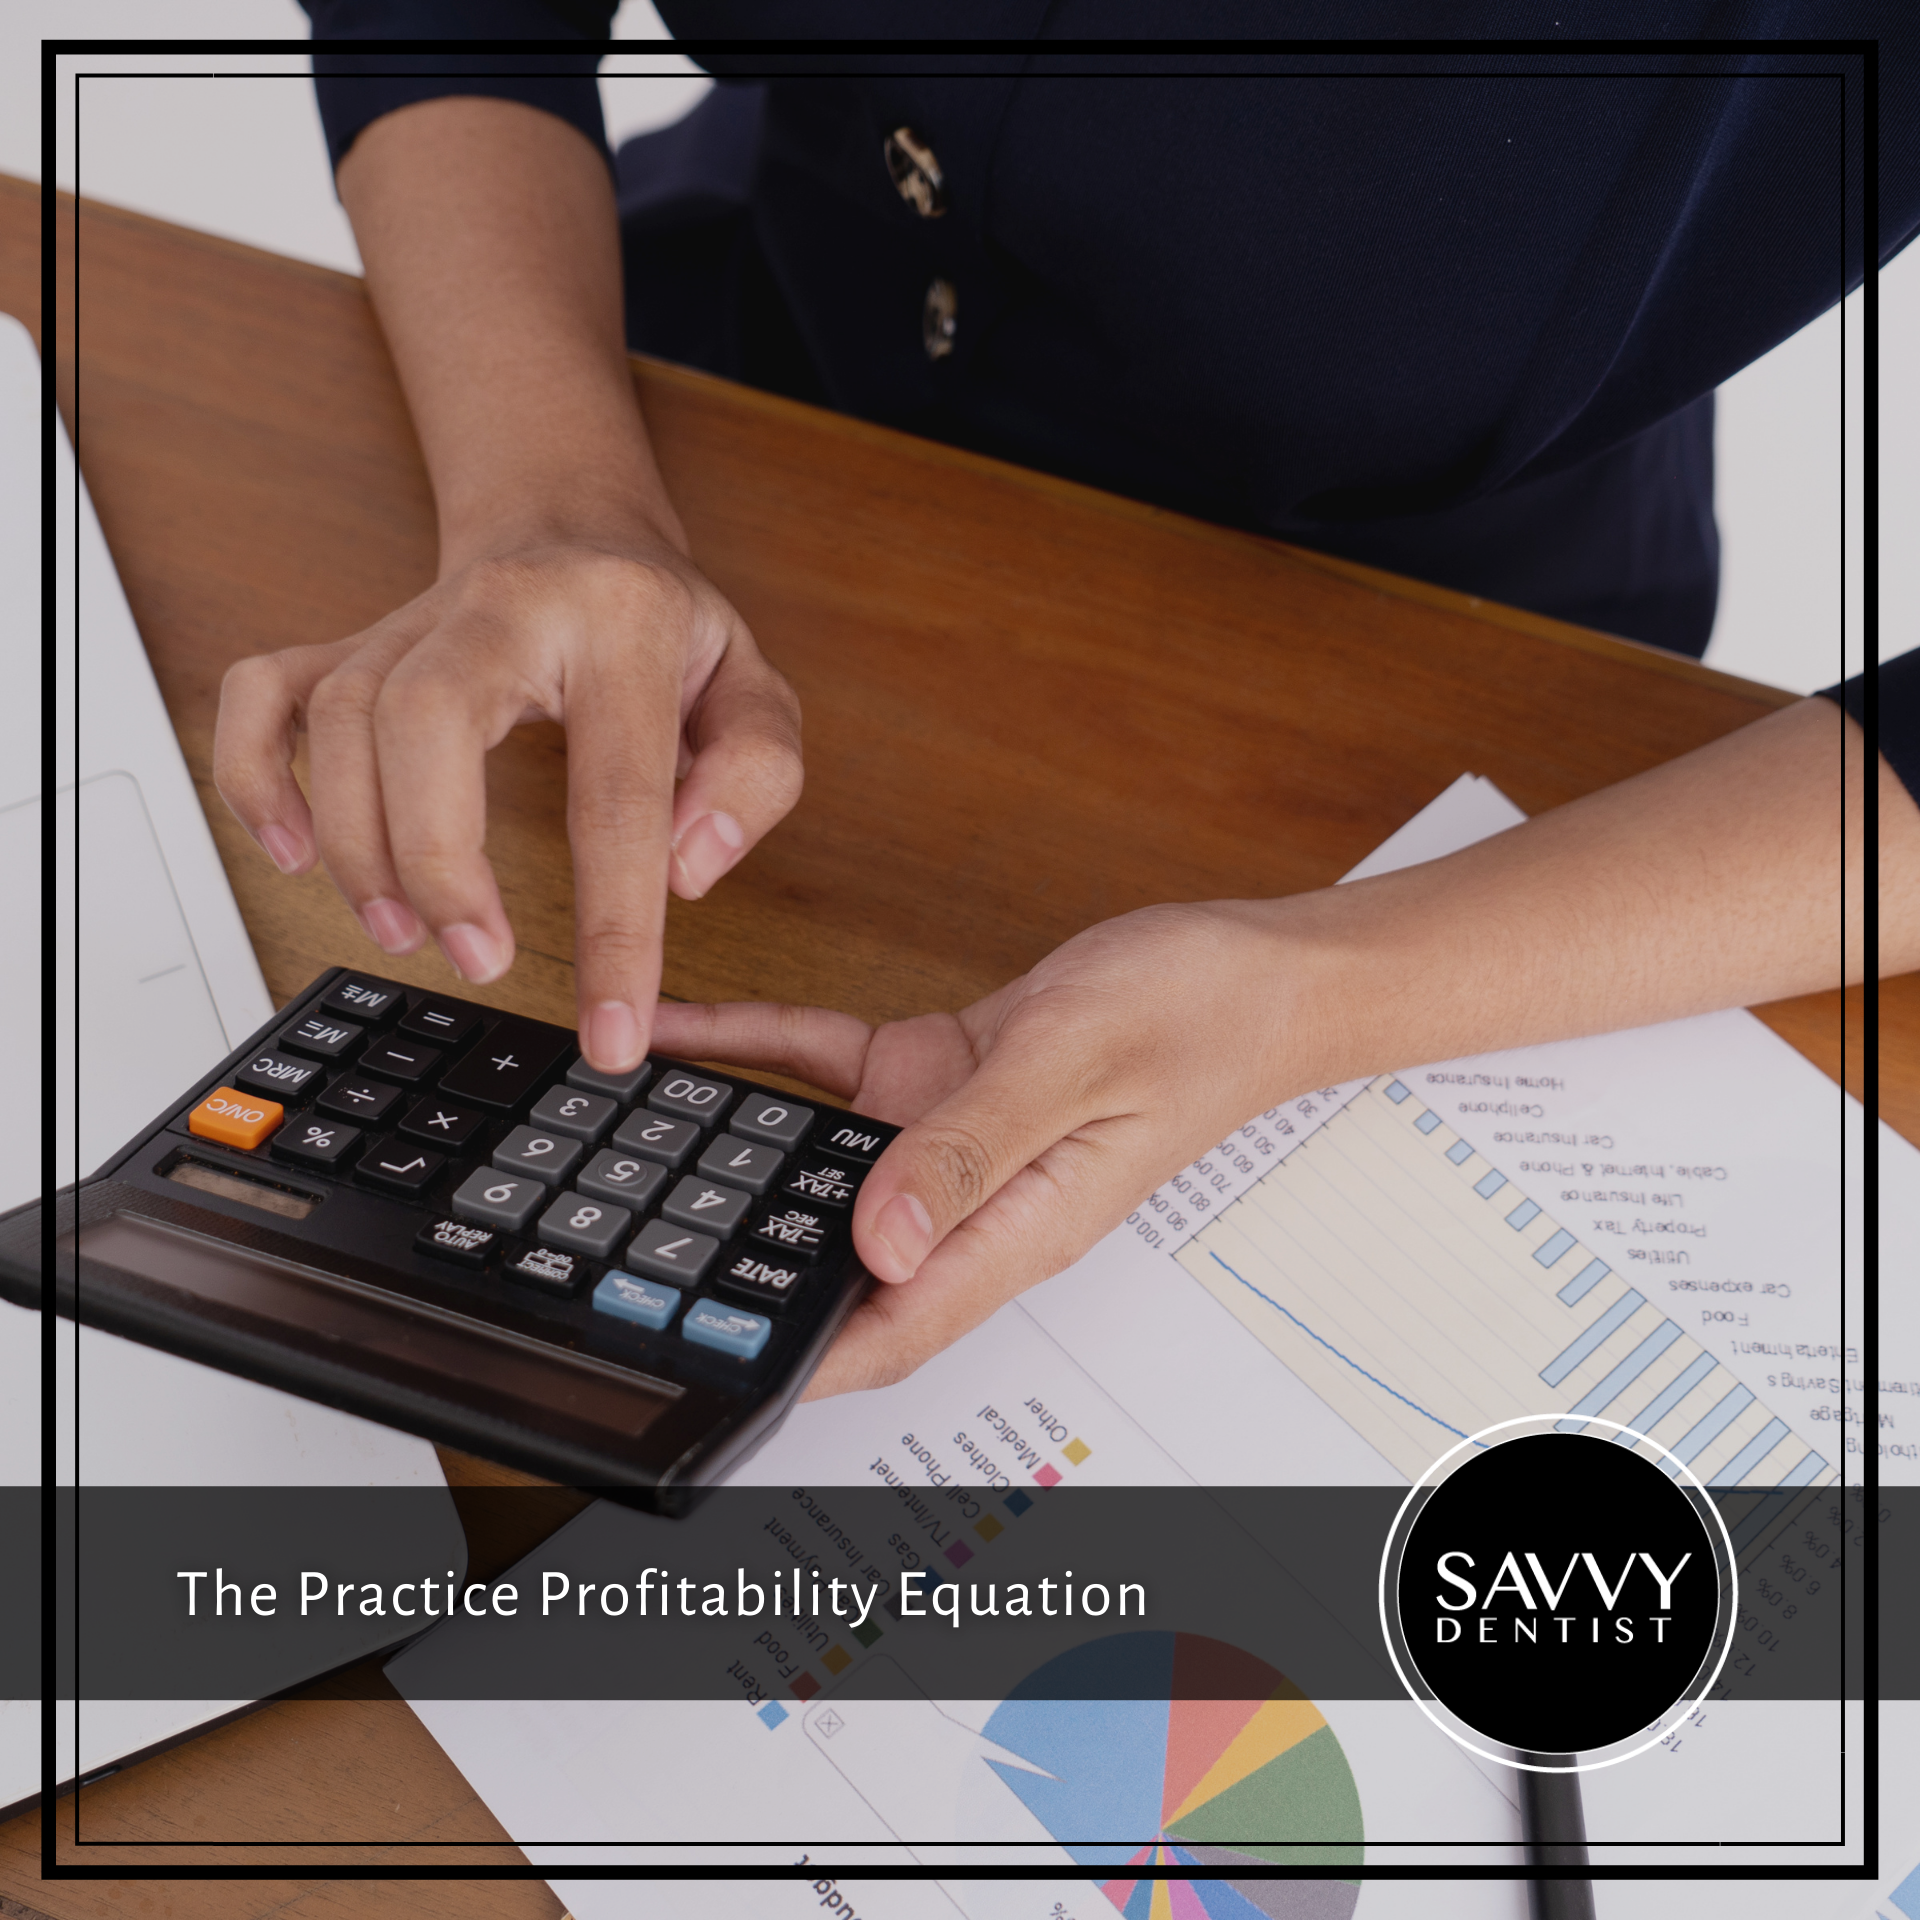 The Practice Profitability Equation